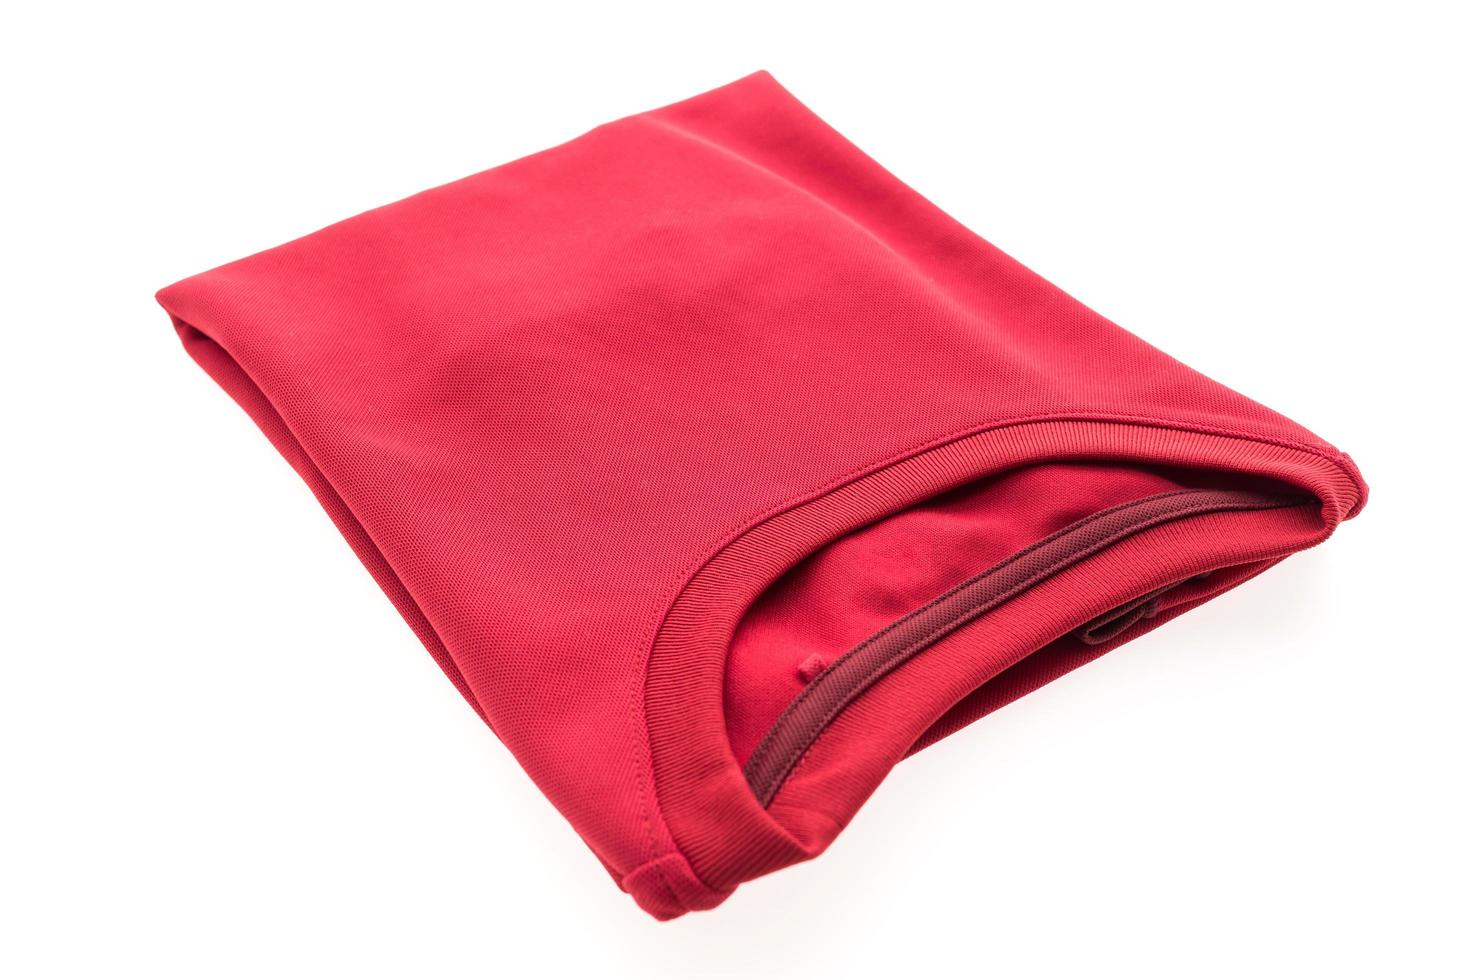 camiseta vermelha para roupas foto